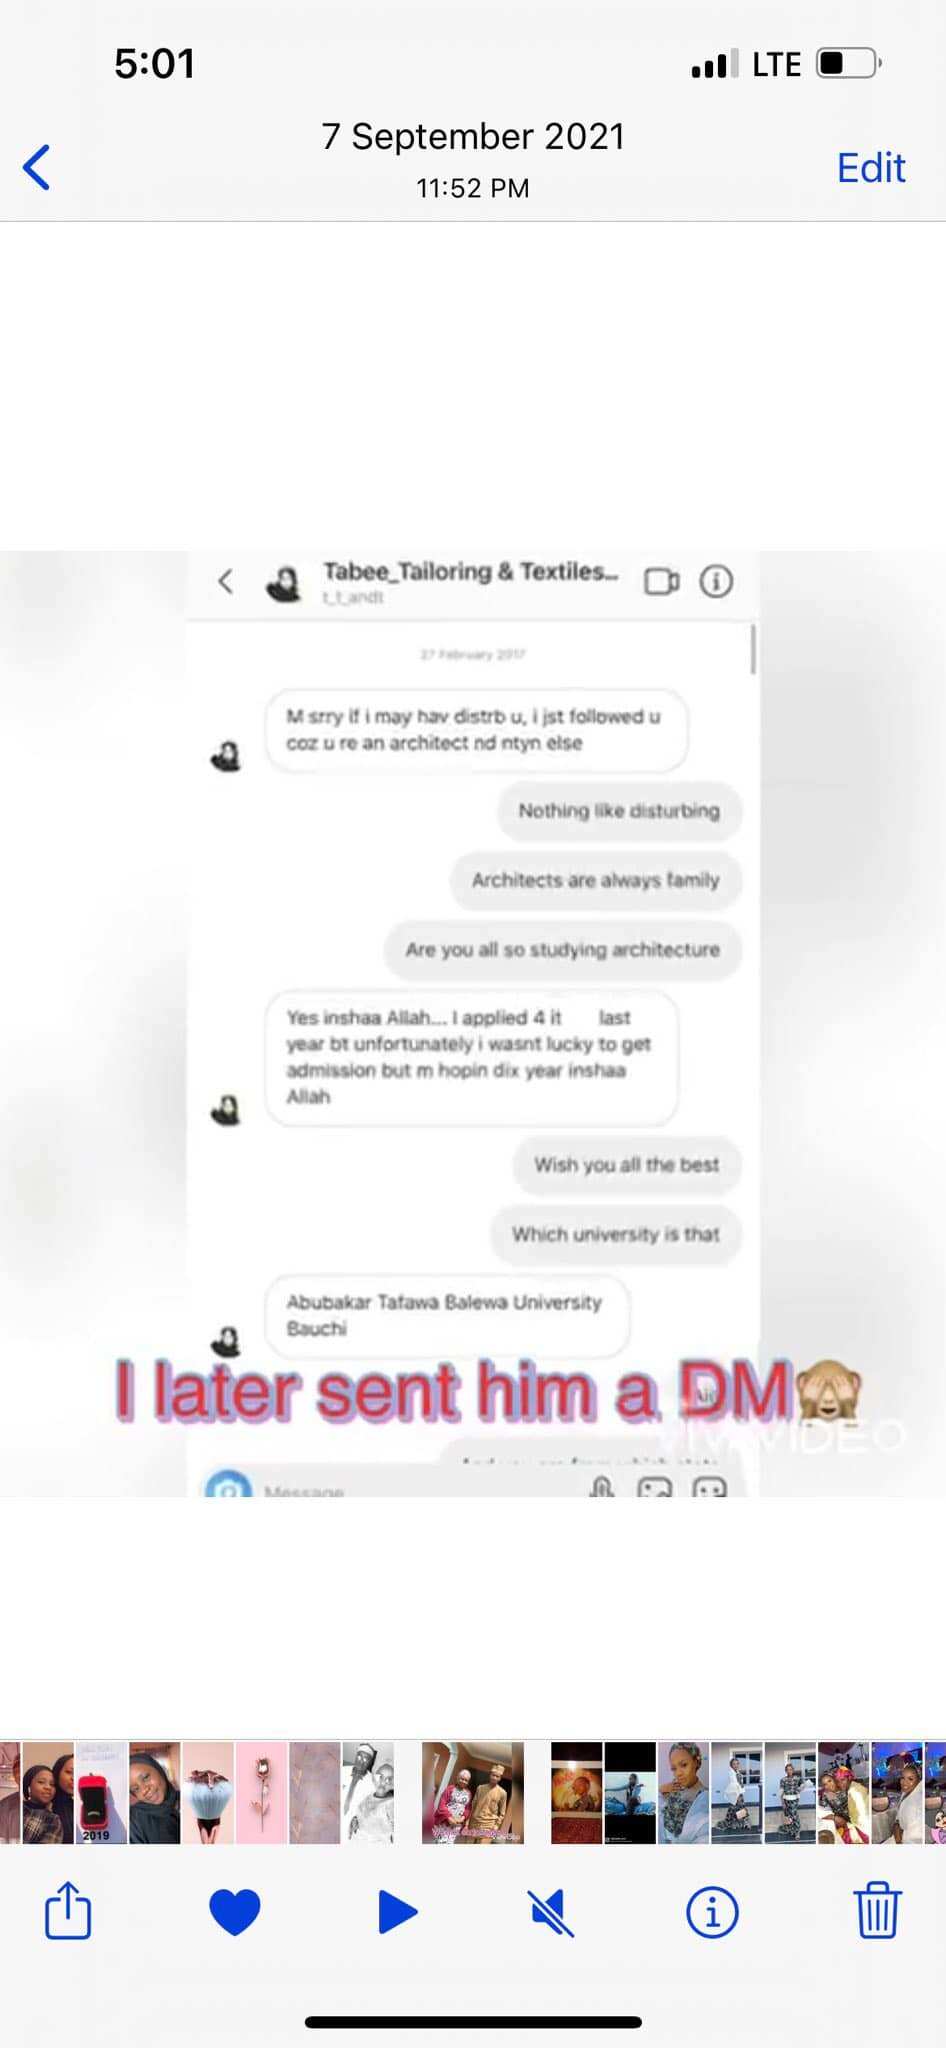 She sent a DM